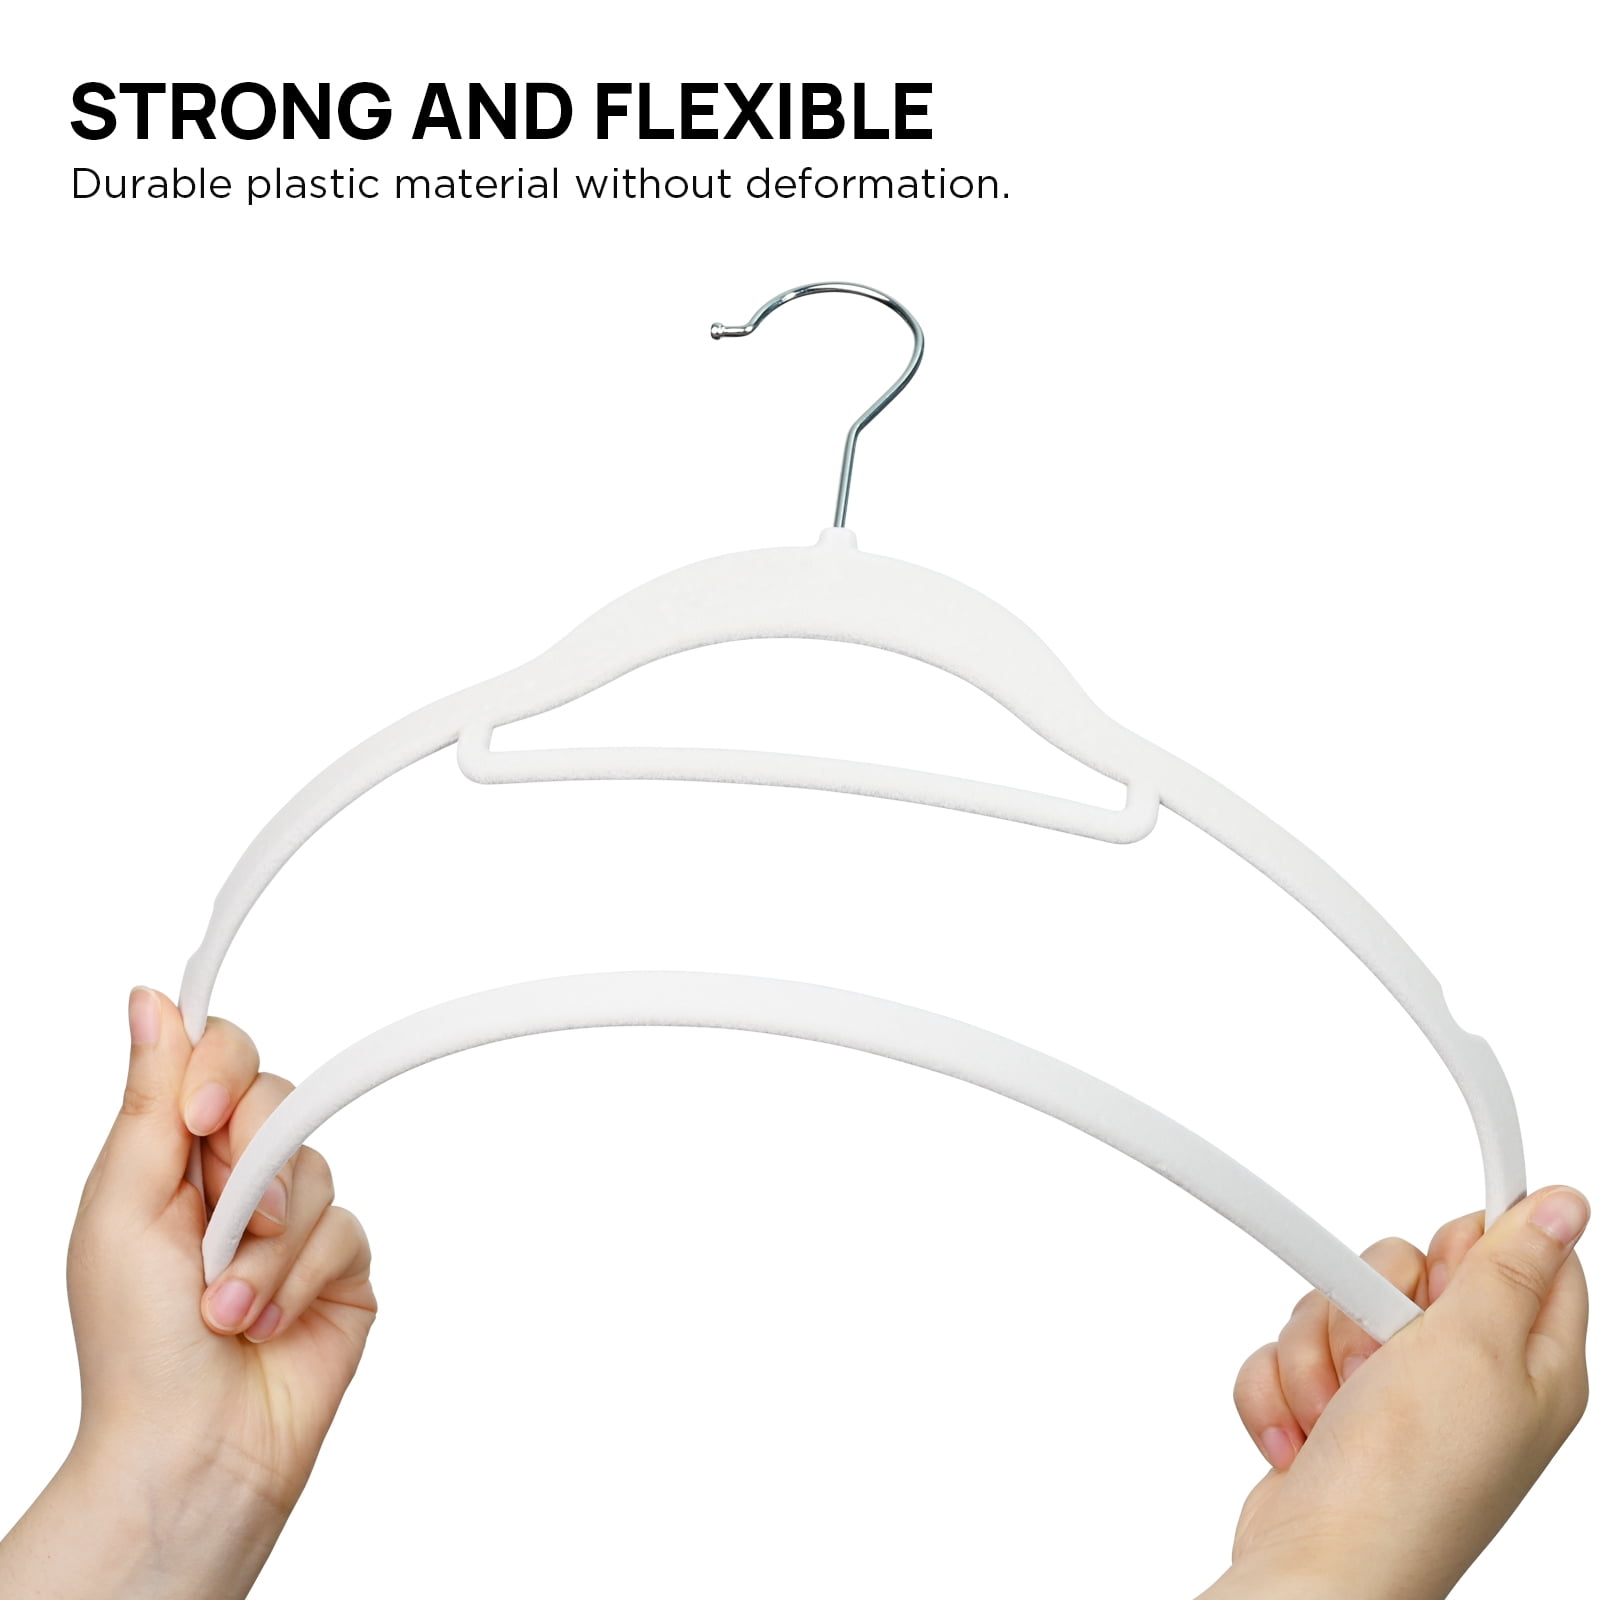 Ollieroo Premium Velvet Hangers,50 Pack Clothing Hangers,Non-Slip and  Durable Coat Hangers,Heavy Duty Hangers with 360 Degree Rotatable Hook,Gray